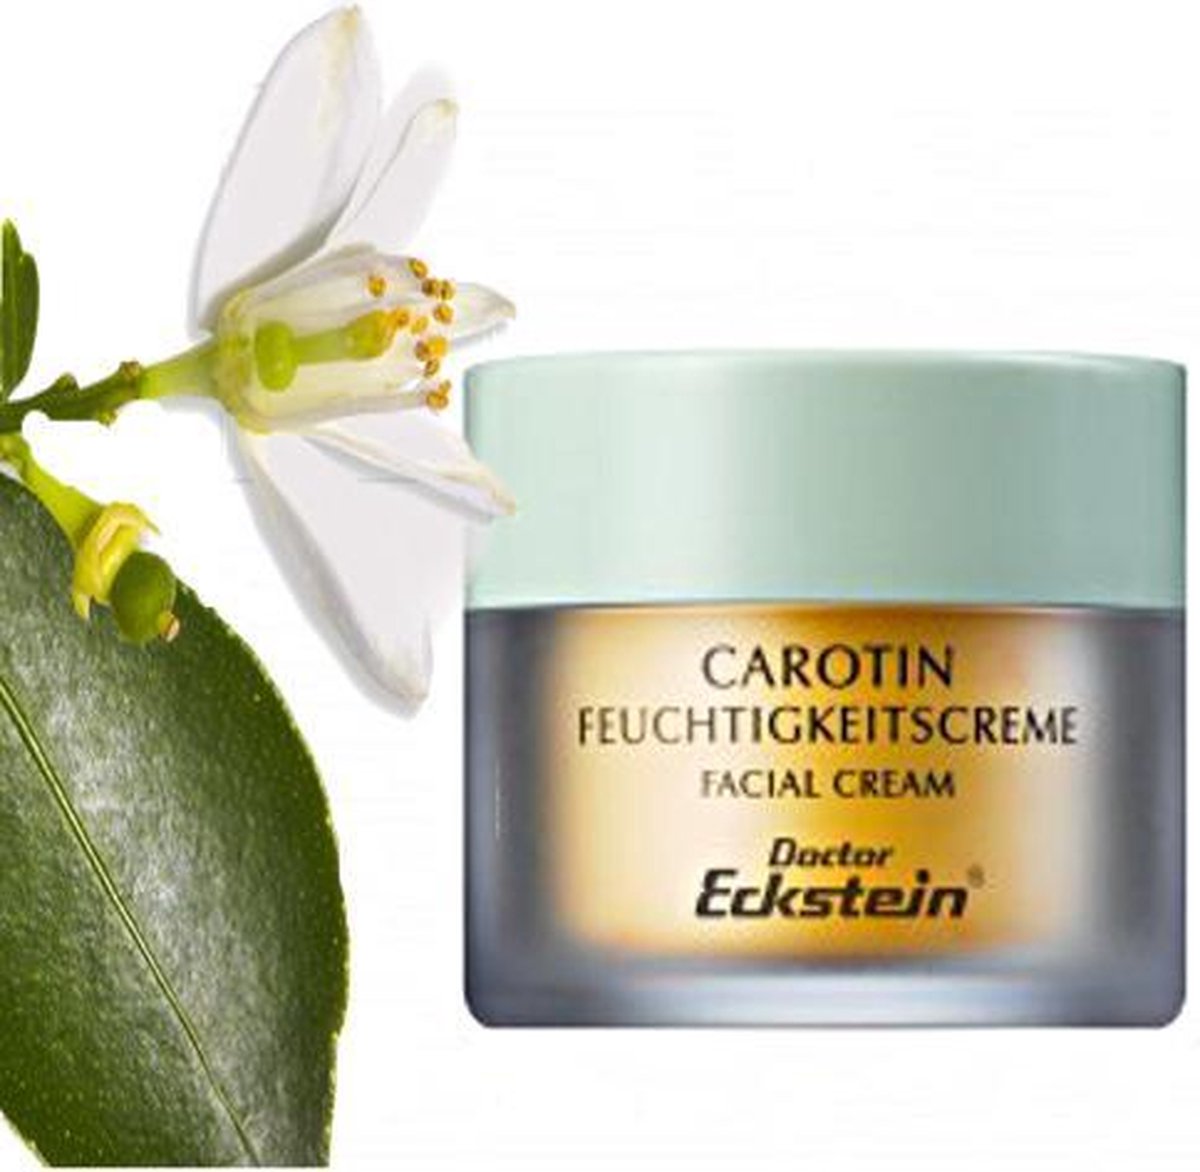 Dr Eckstein - Carotin Feuchtigkeitscrème 50 ml | bol.com